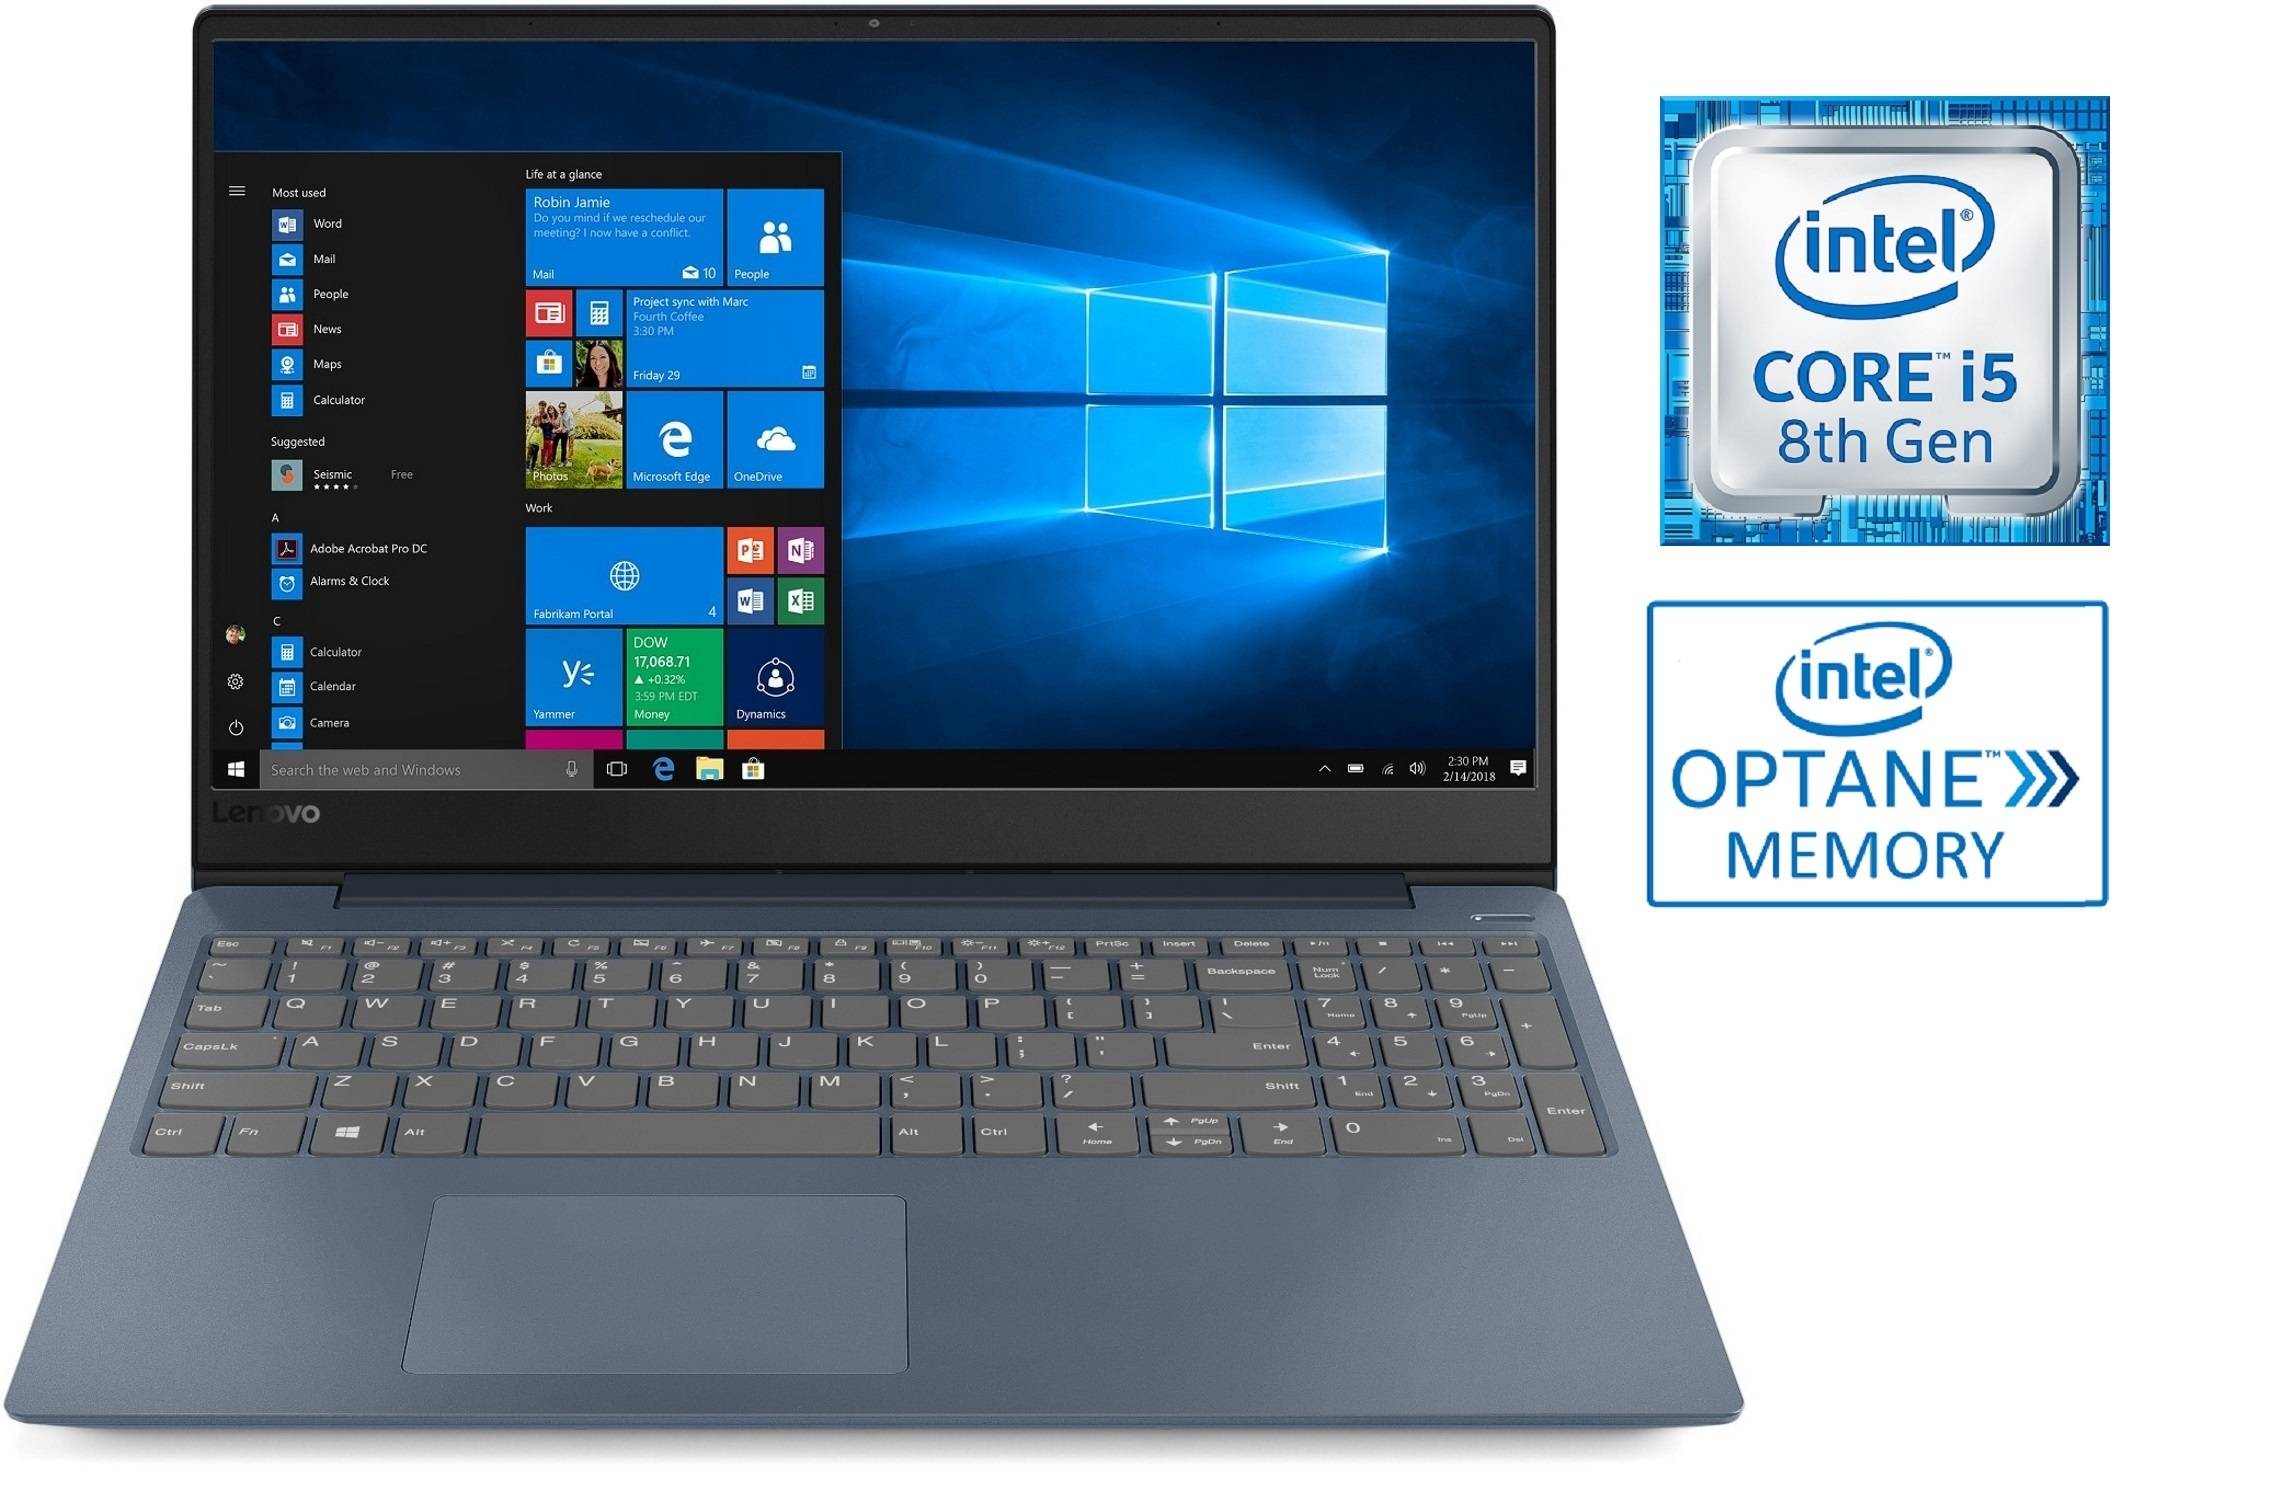 Lenovo IdeaPad 330S Core i5-8250U 1TB HD 4GB+16GB Intel Optane 15.6" WLED Laptop